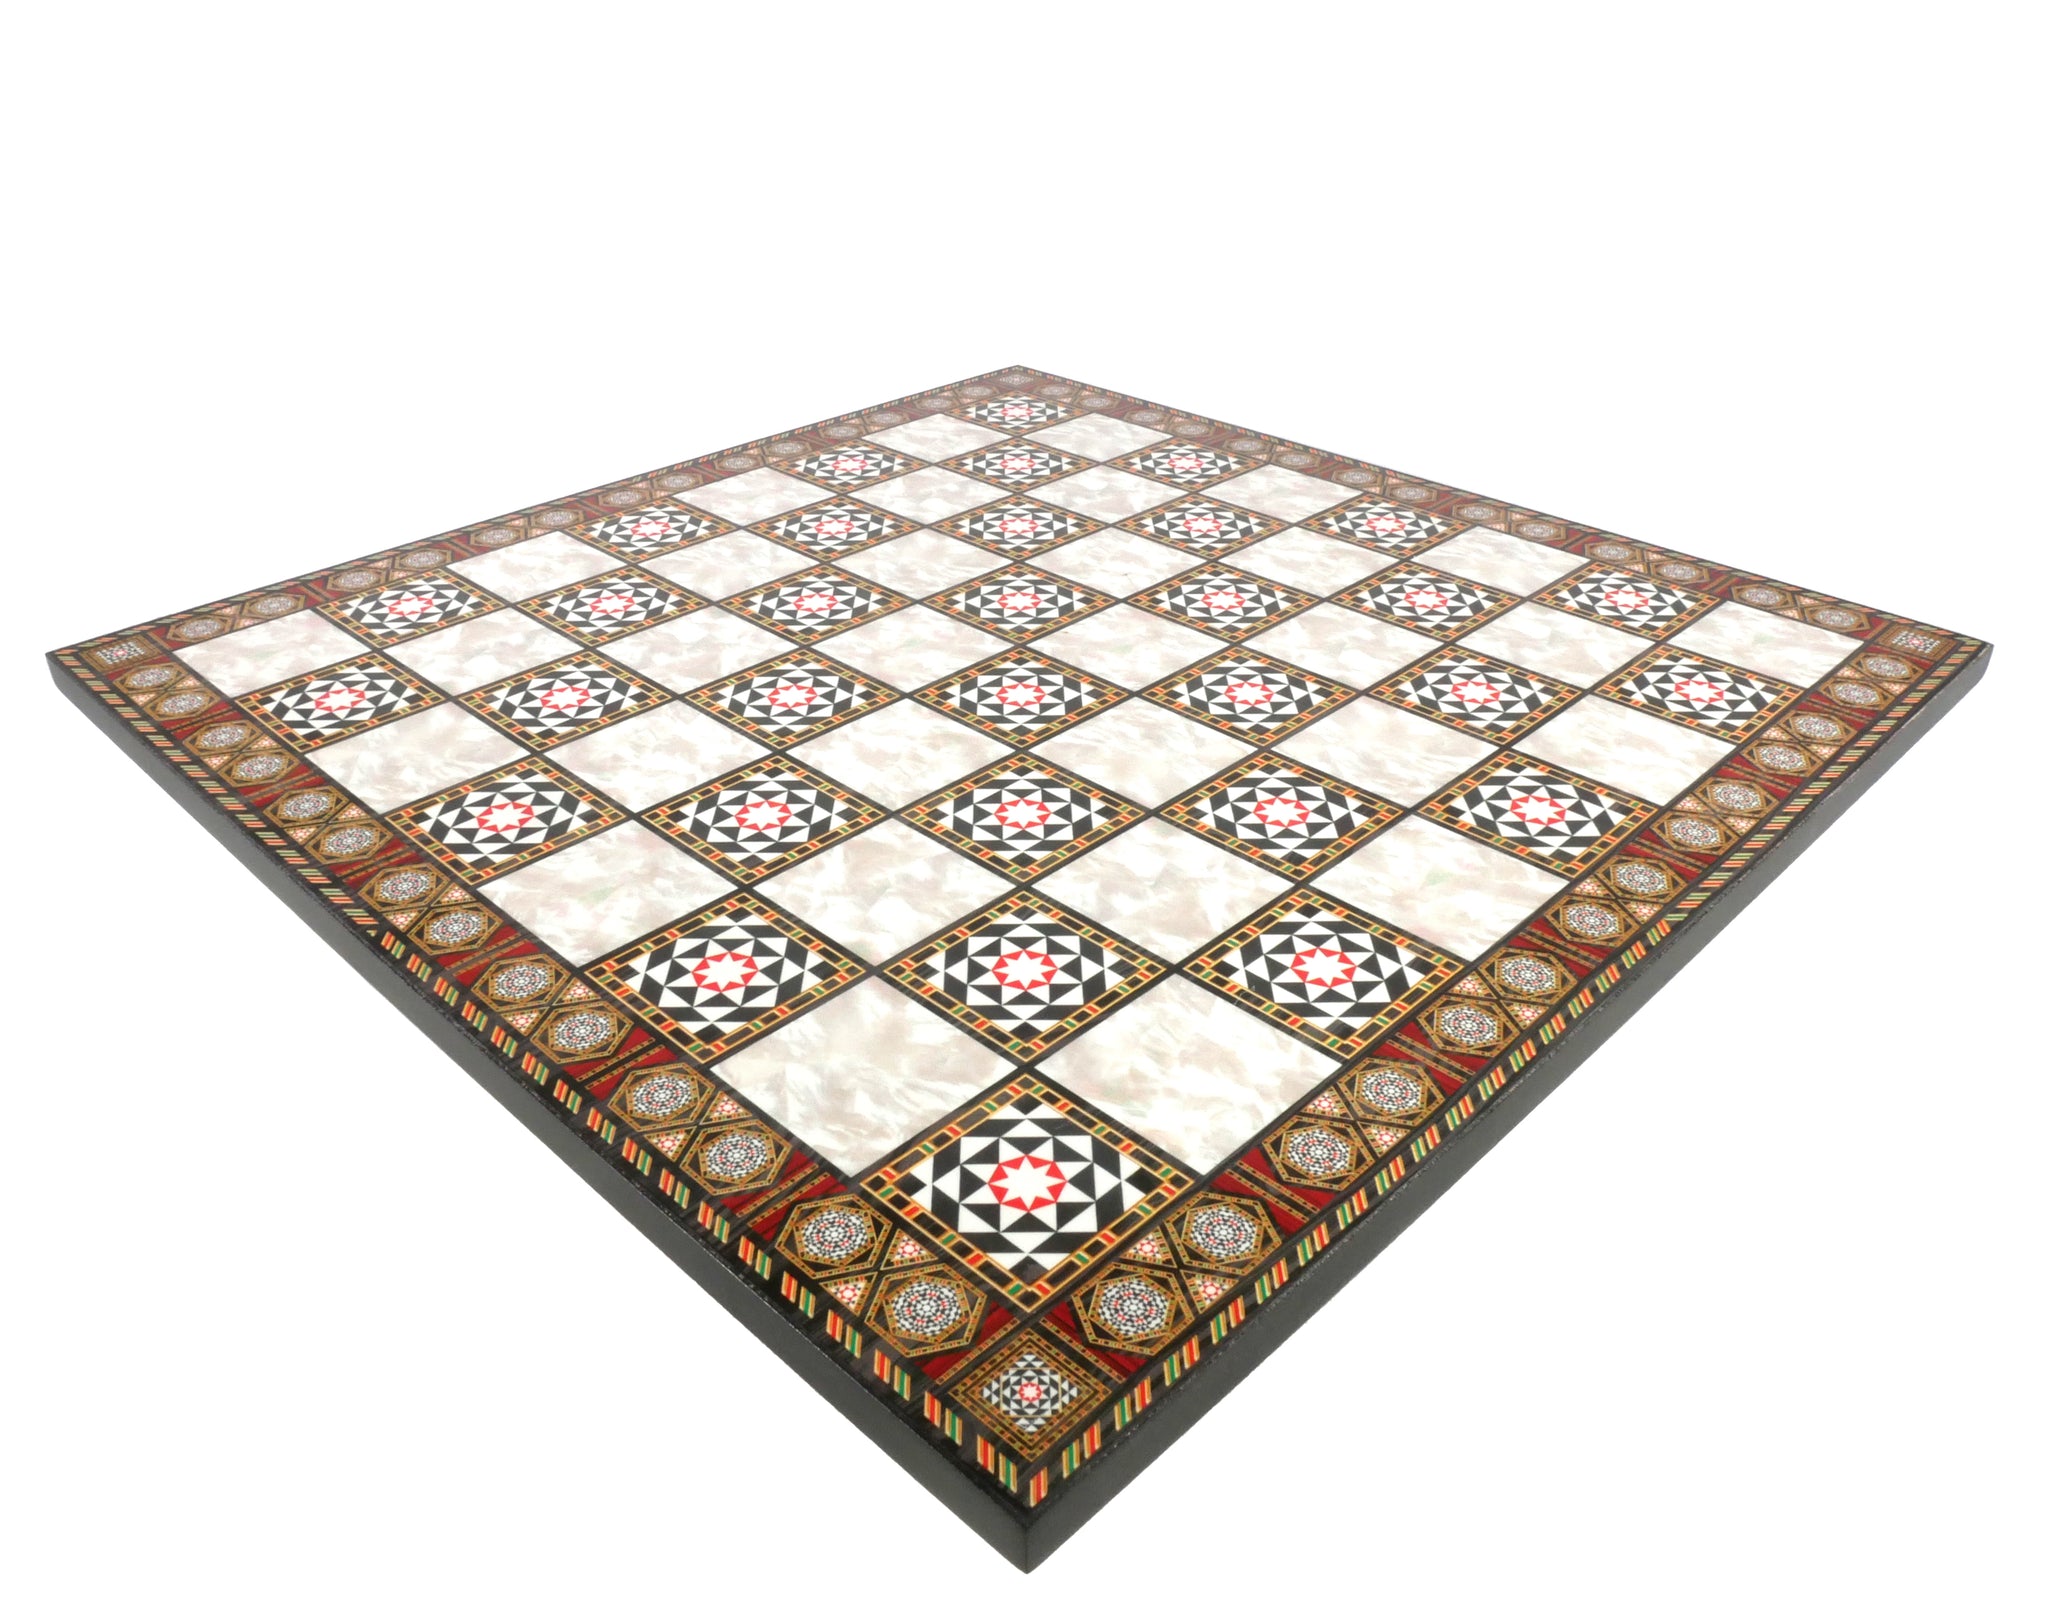 Chess Board - Decoupage Mosaic Design 14"